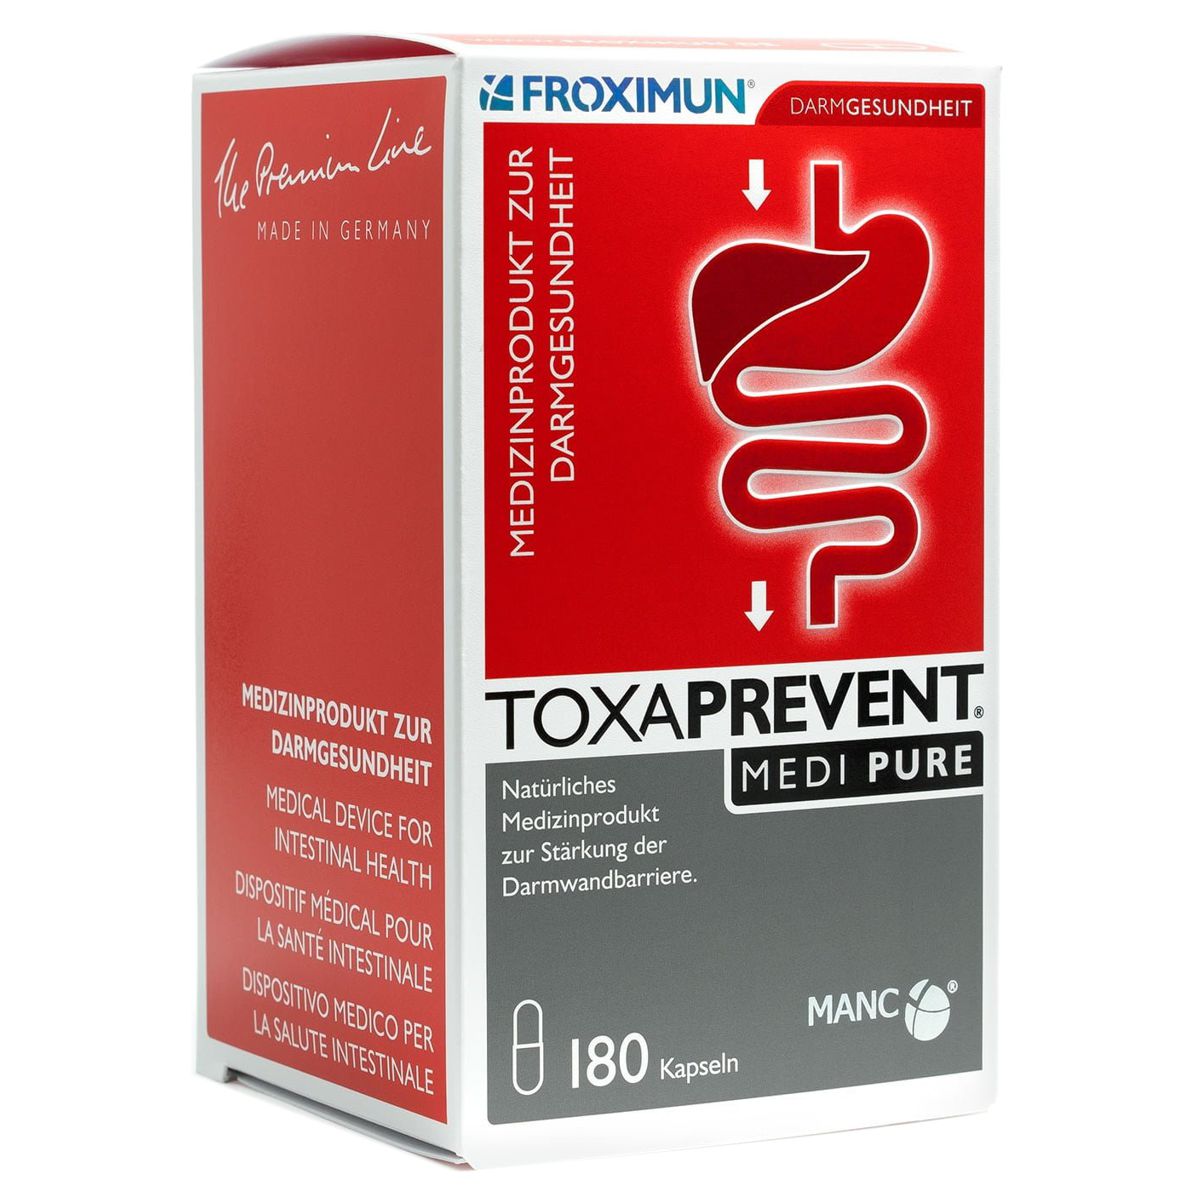 Toxaprevent Medi Pure Kapseln 180 Stück